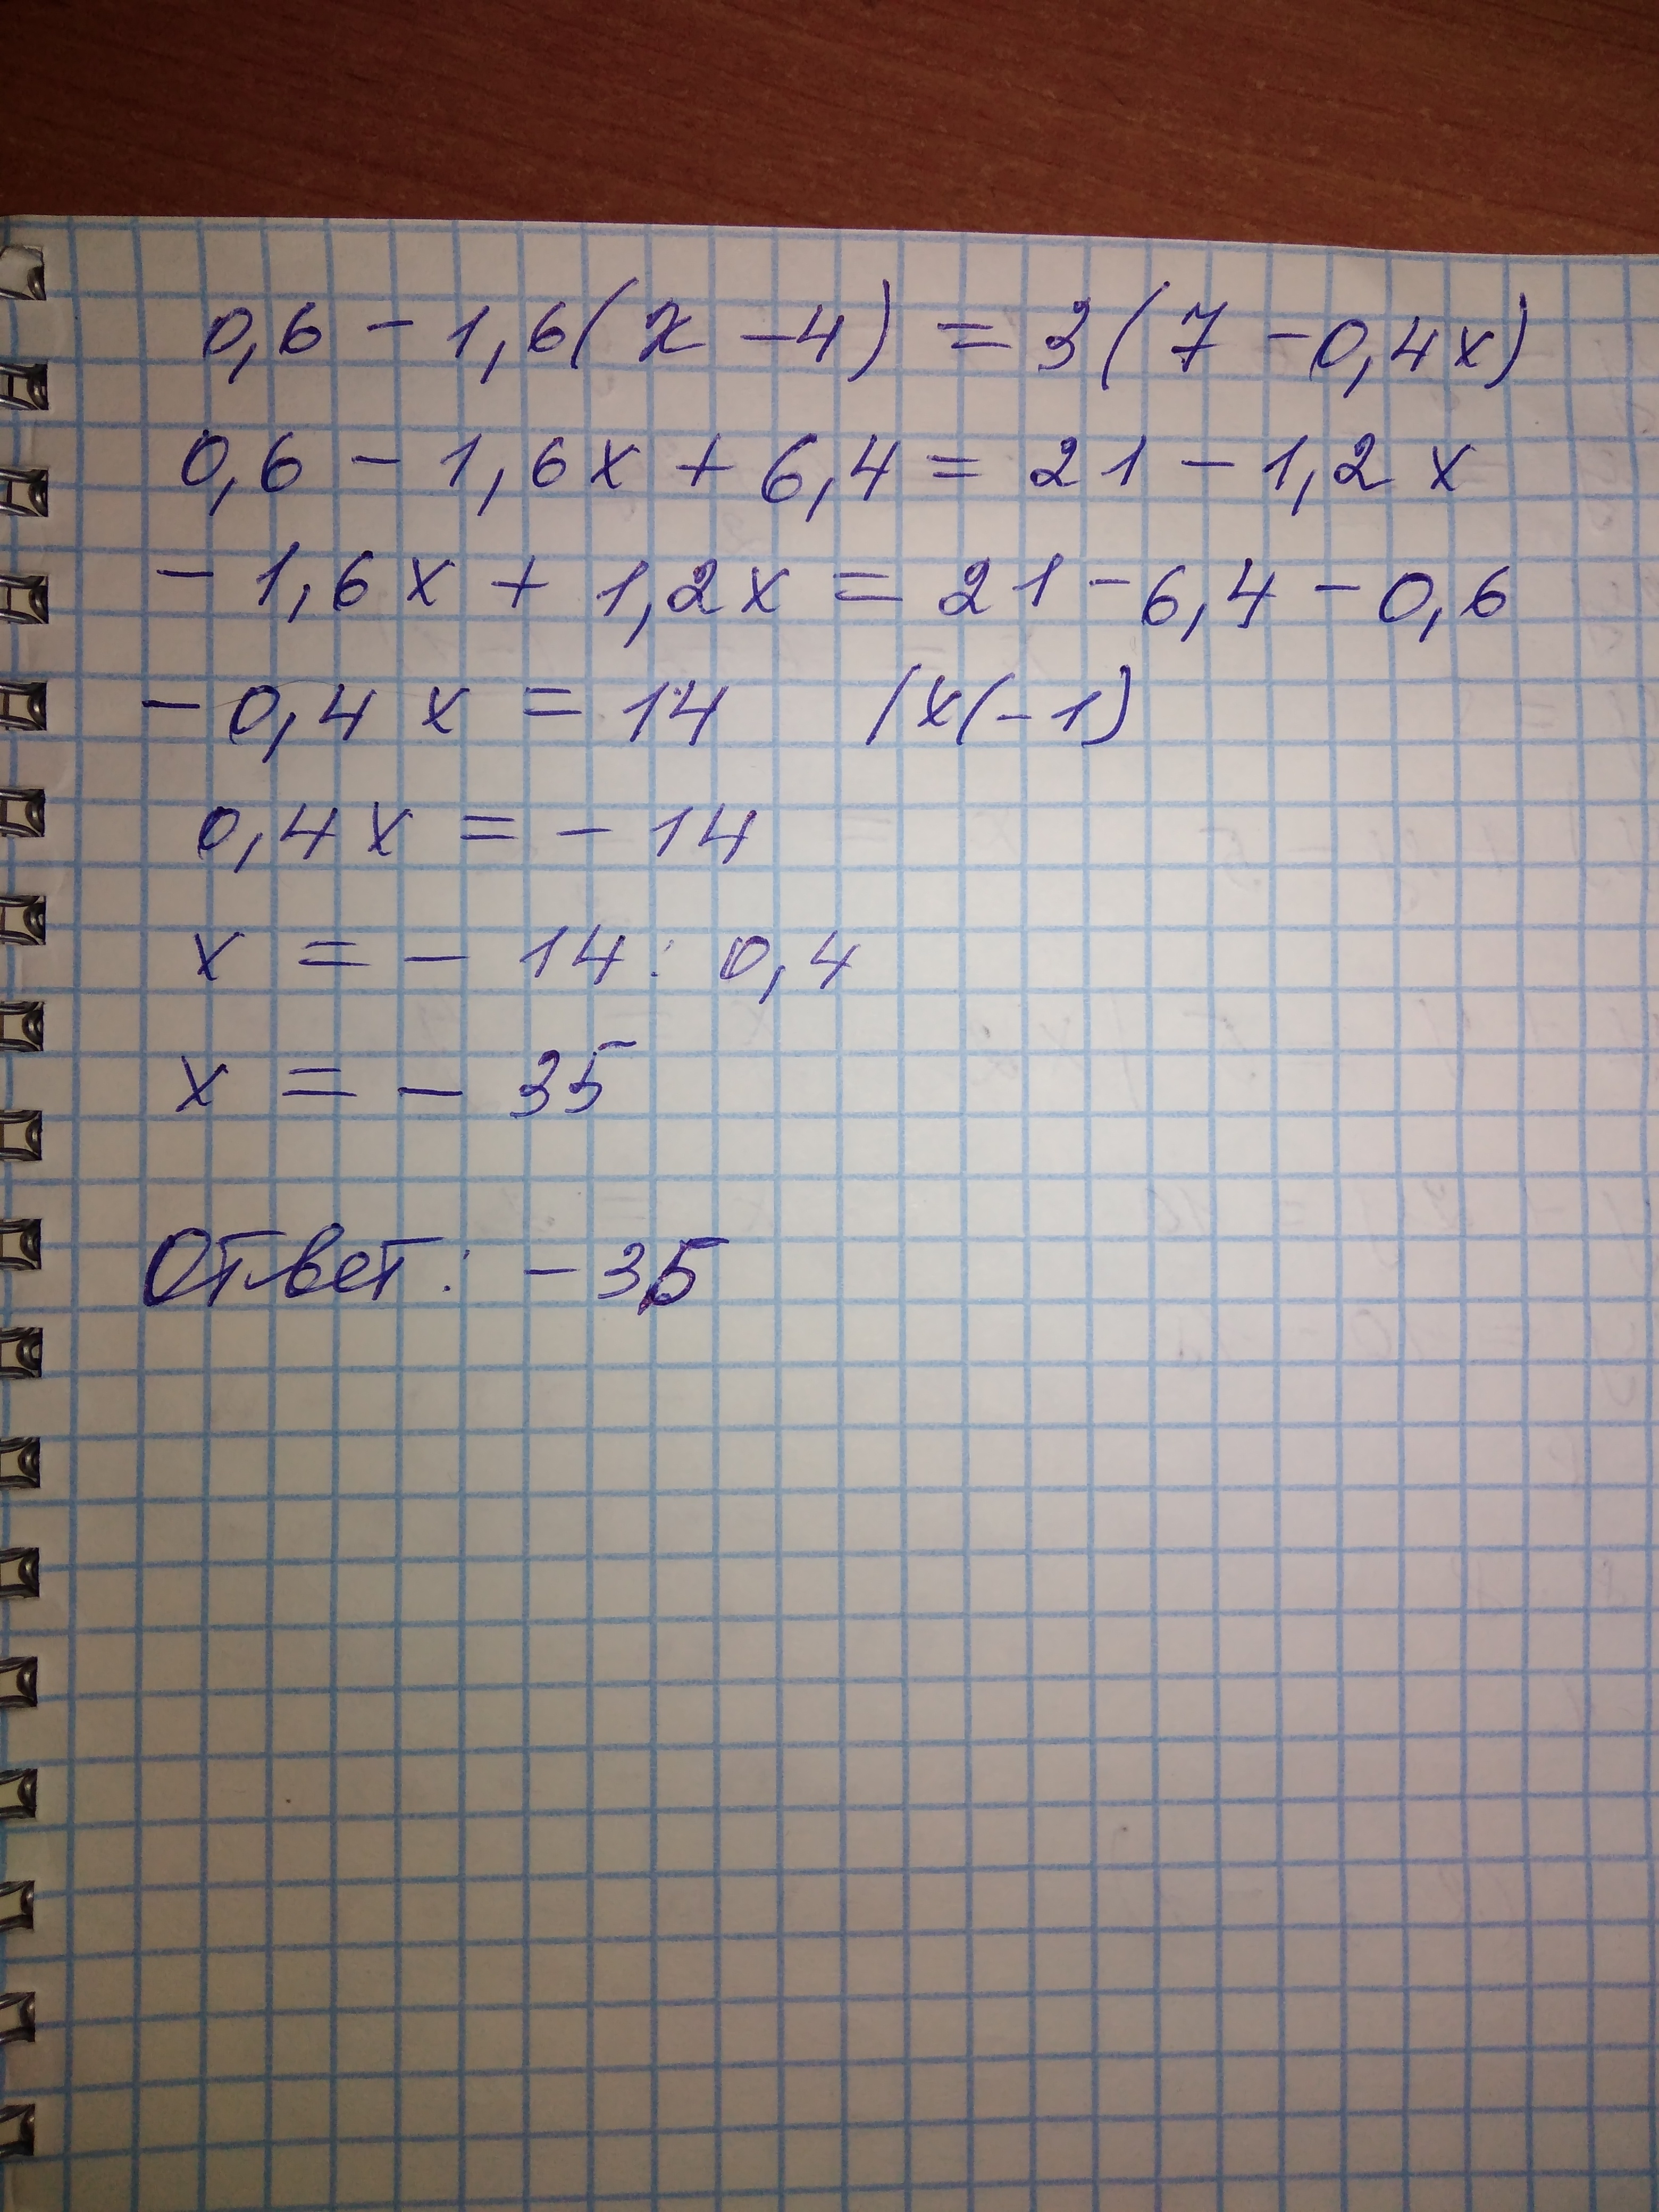 4x2 6x 1 0. 6x4. X+6=X*4. X+6=X×4 решение. 3x(x - 4x + 6).